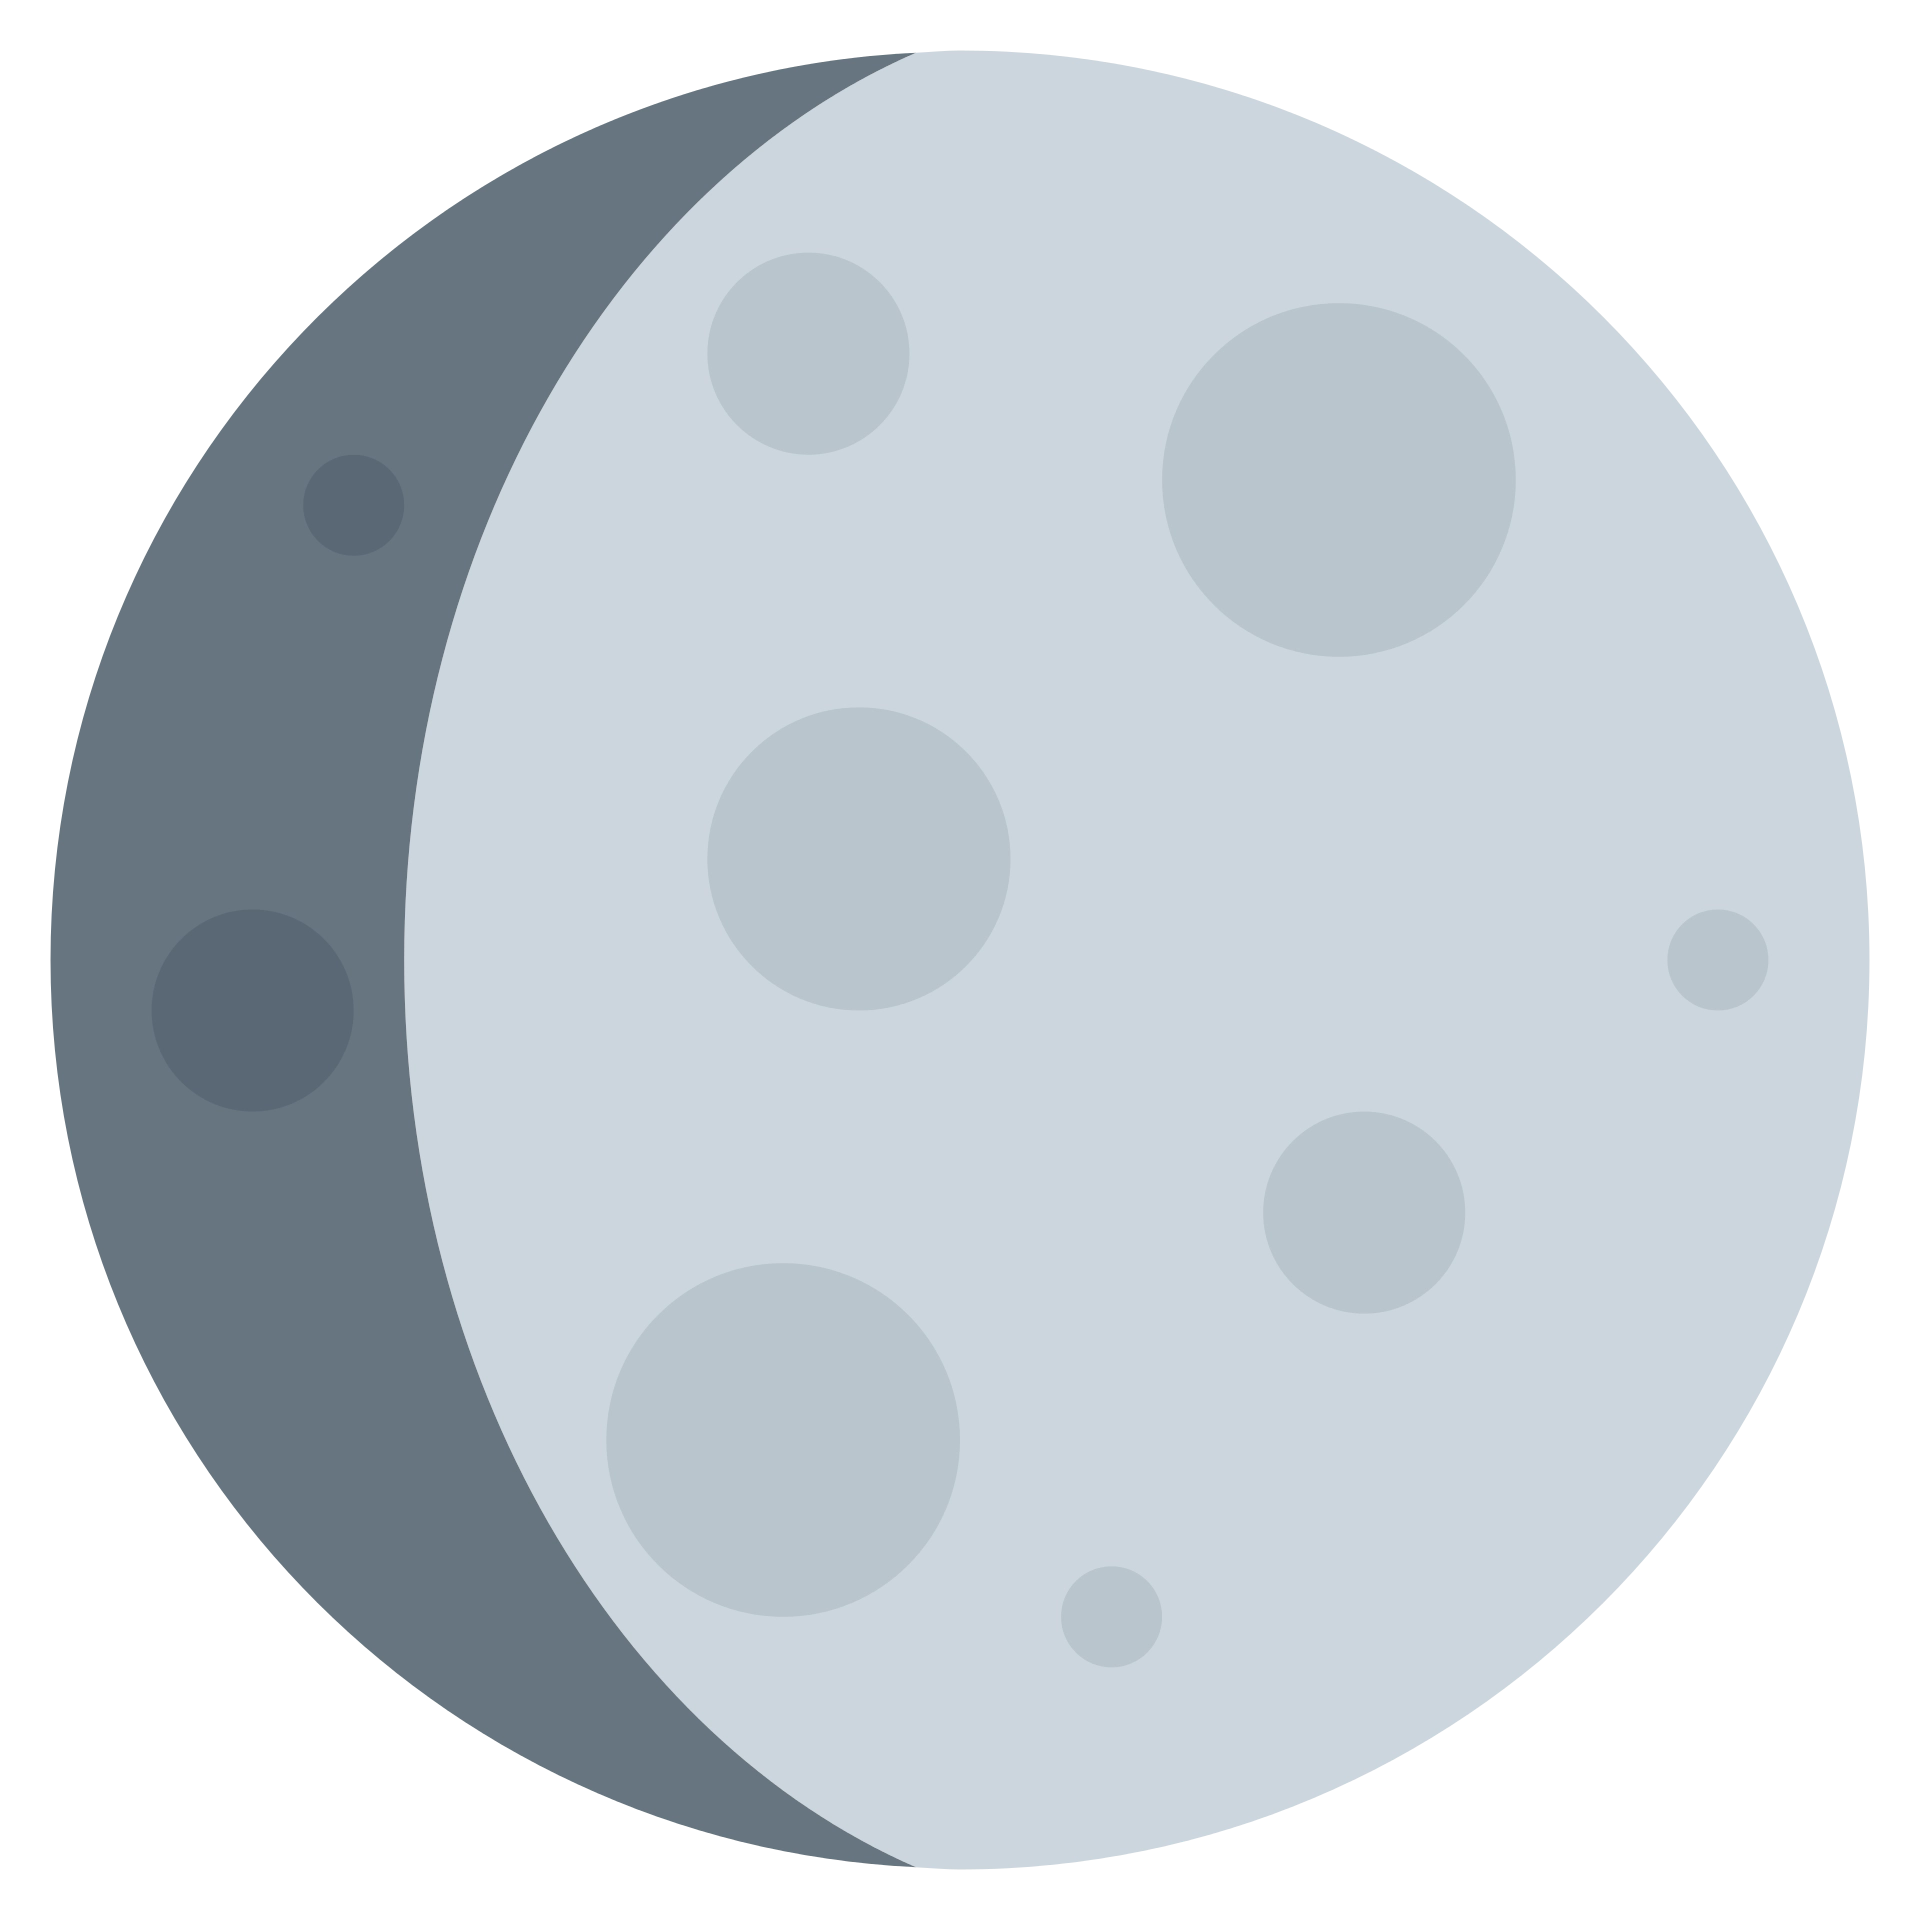 moon phase